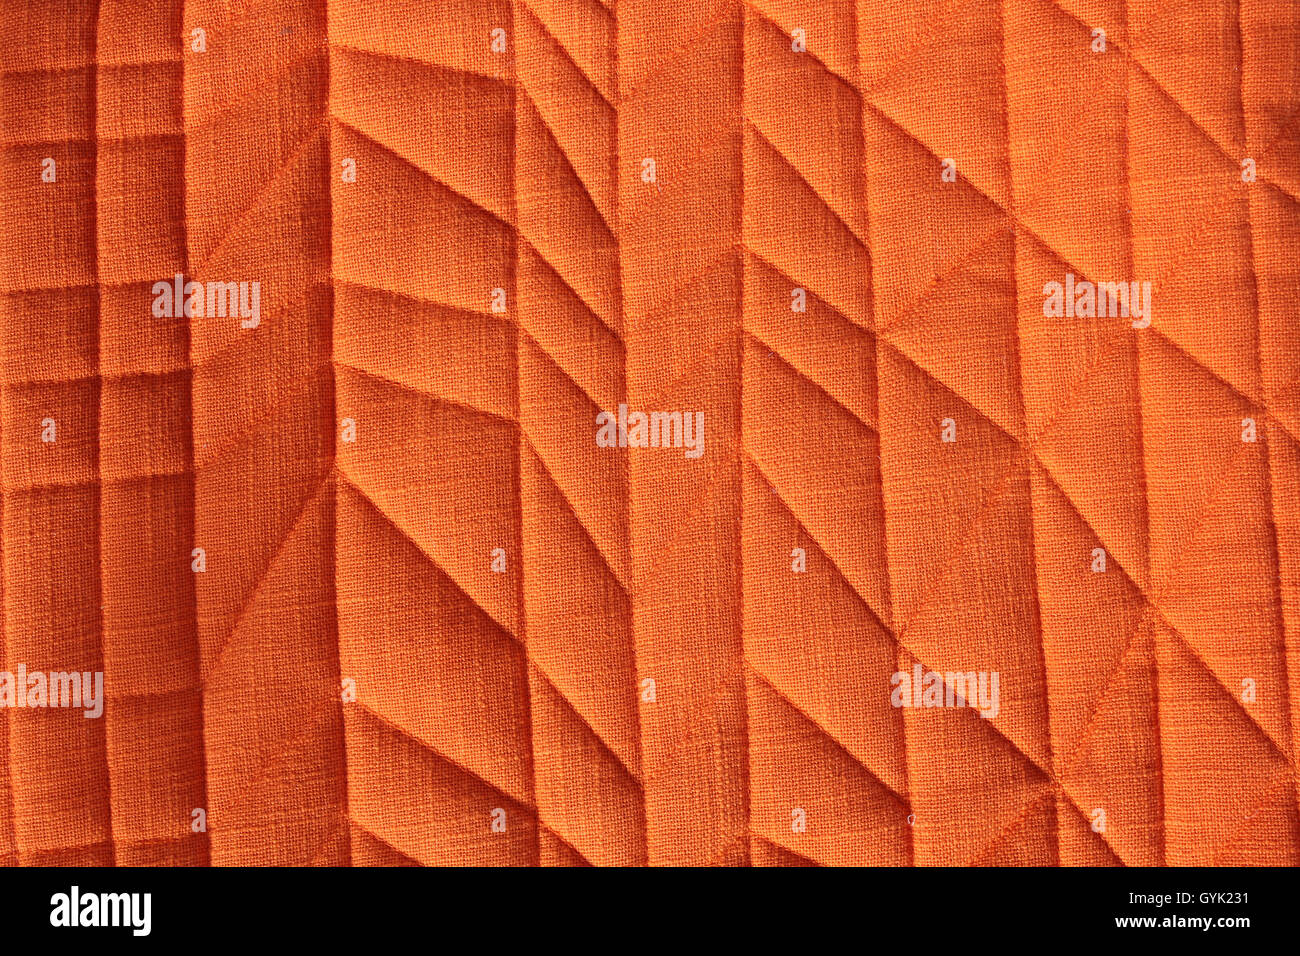 A close up of s rich, vibrant fabric. Interior design inspiration. Stock Photo